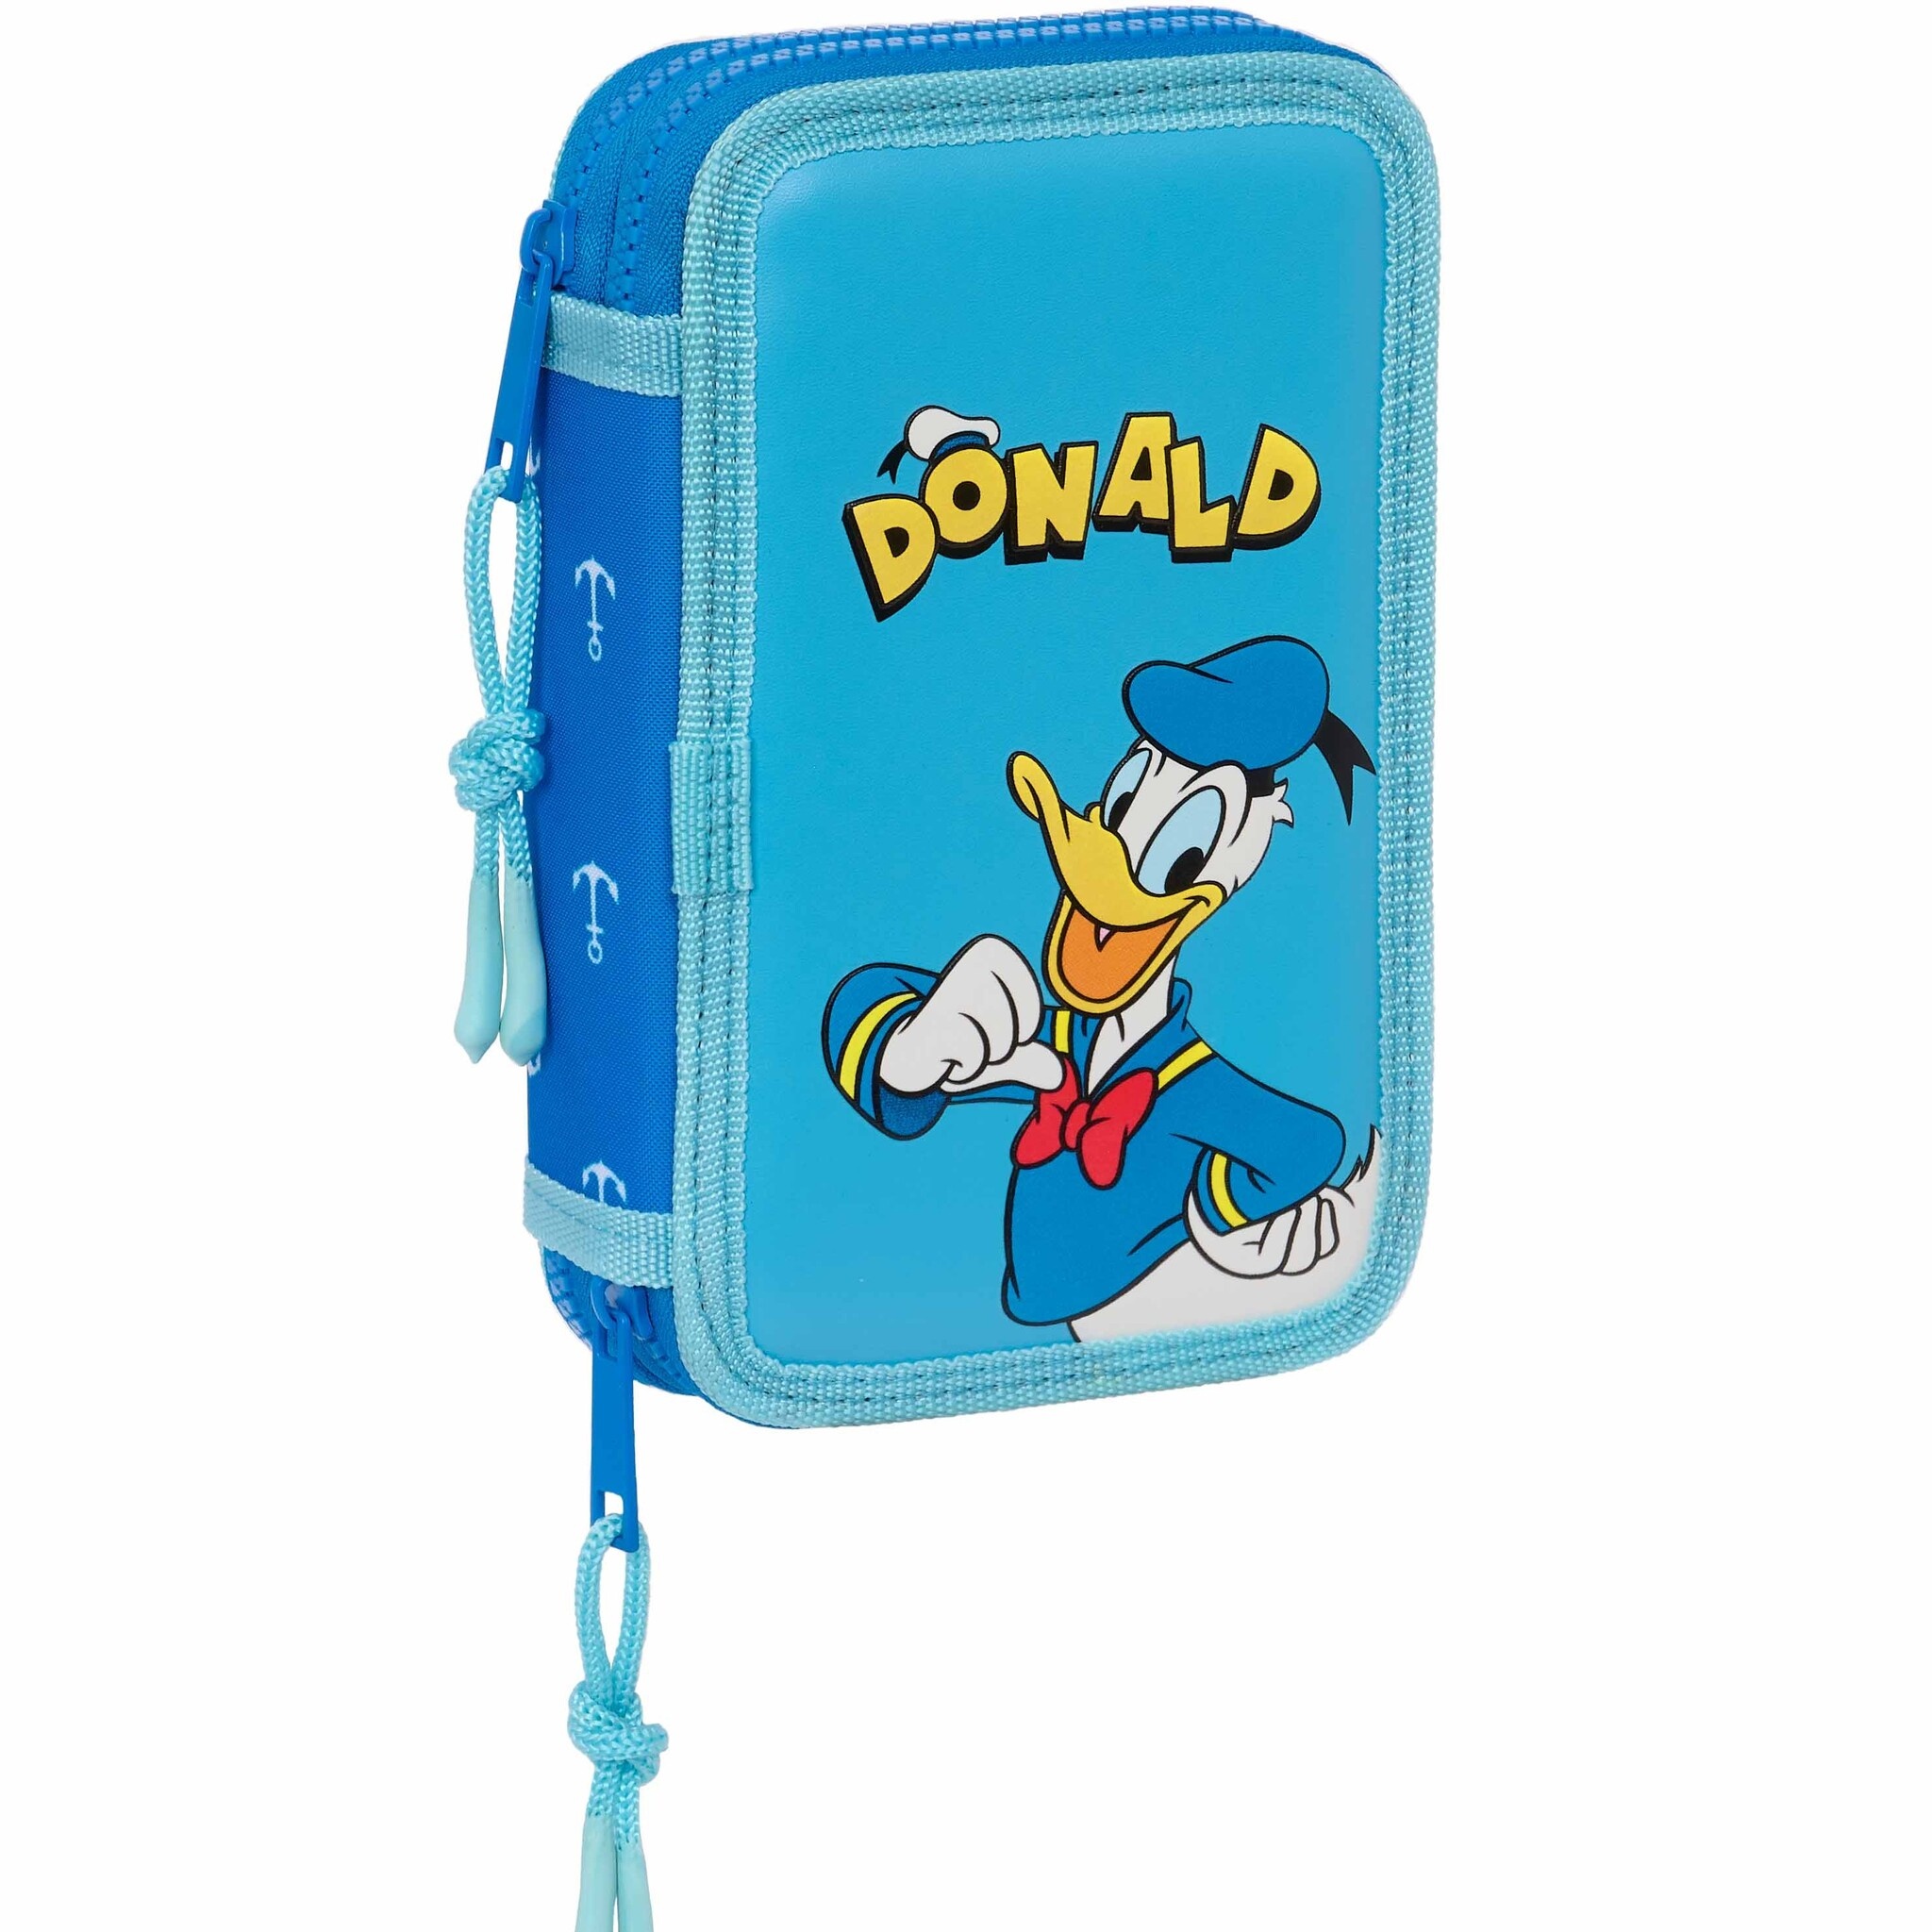 Disney Donald Duck Filled Pouch, Navy - 28 pcs. - 19.5 x 12.5 x 4 cm - Polyester